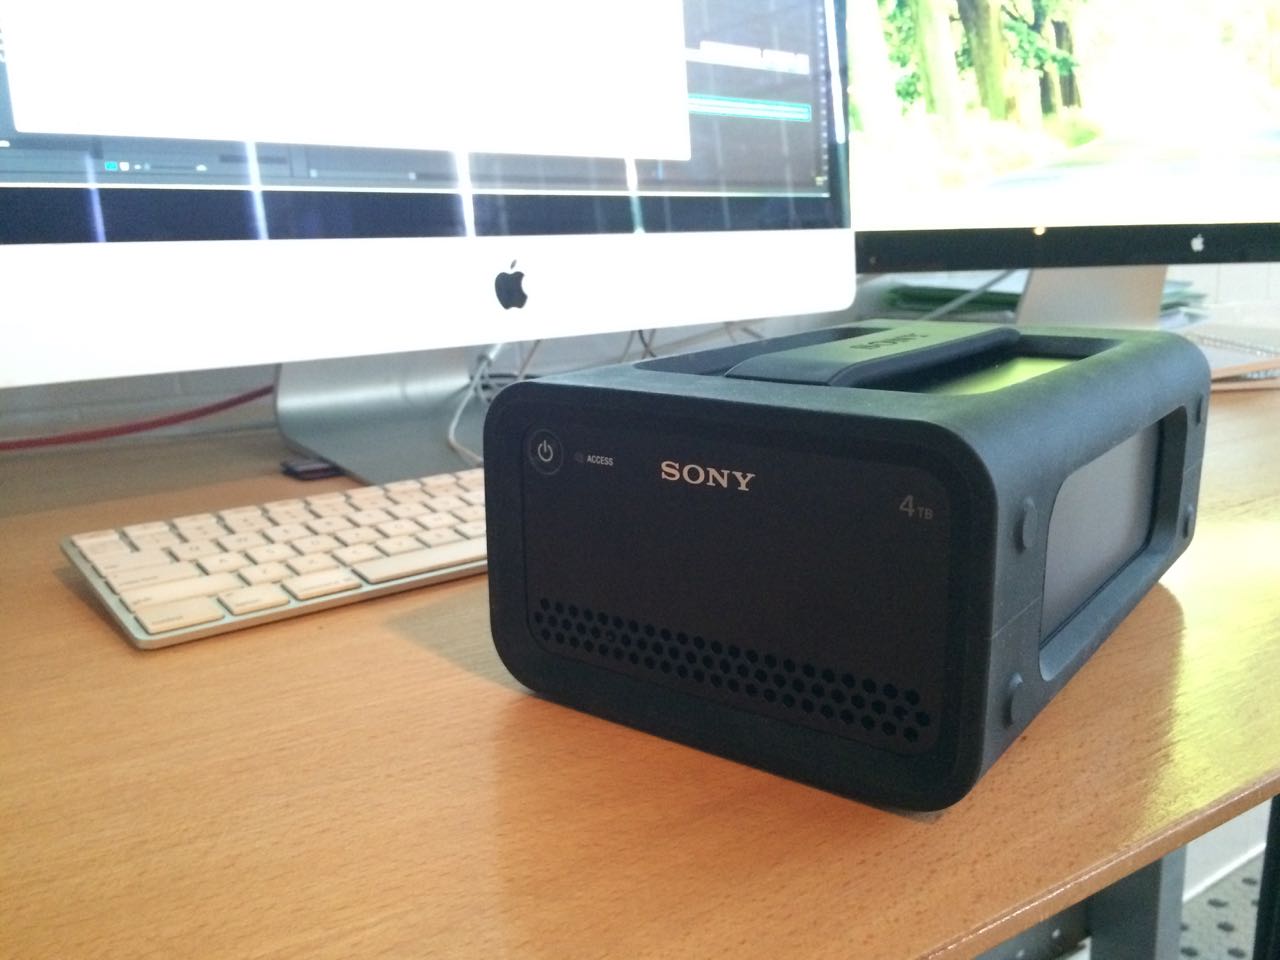 Review: Sony PSZ-RA4T hard drive - A very portable rugged RAID 21